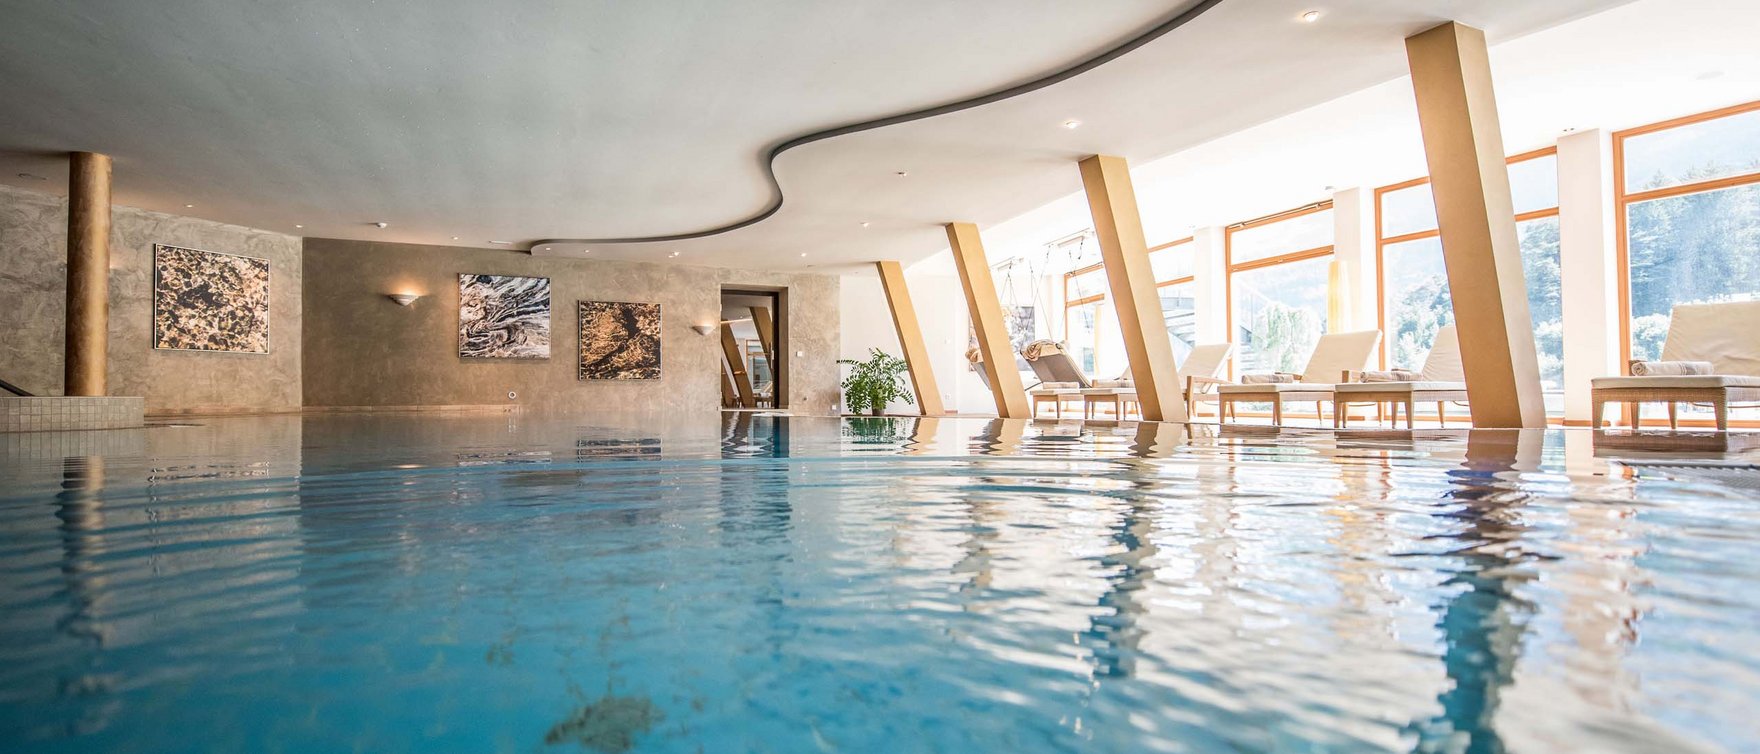 Pustertal: Hotel mit Pool